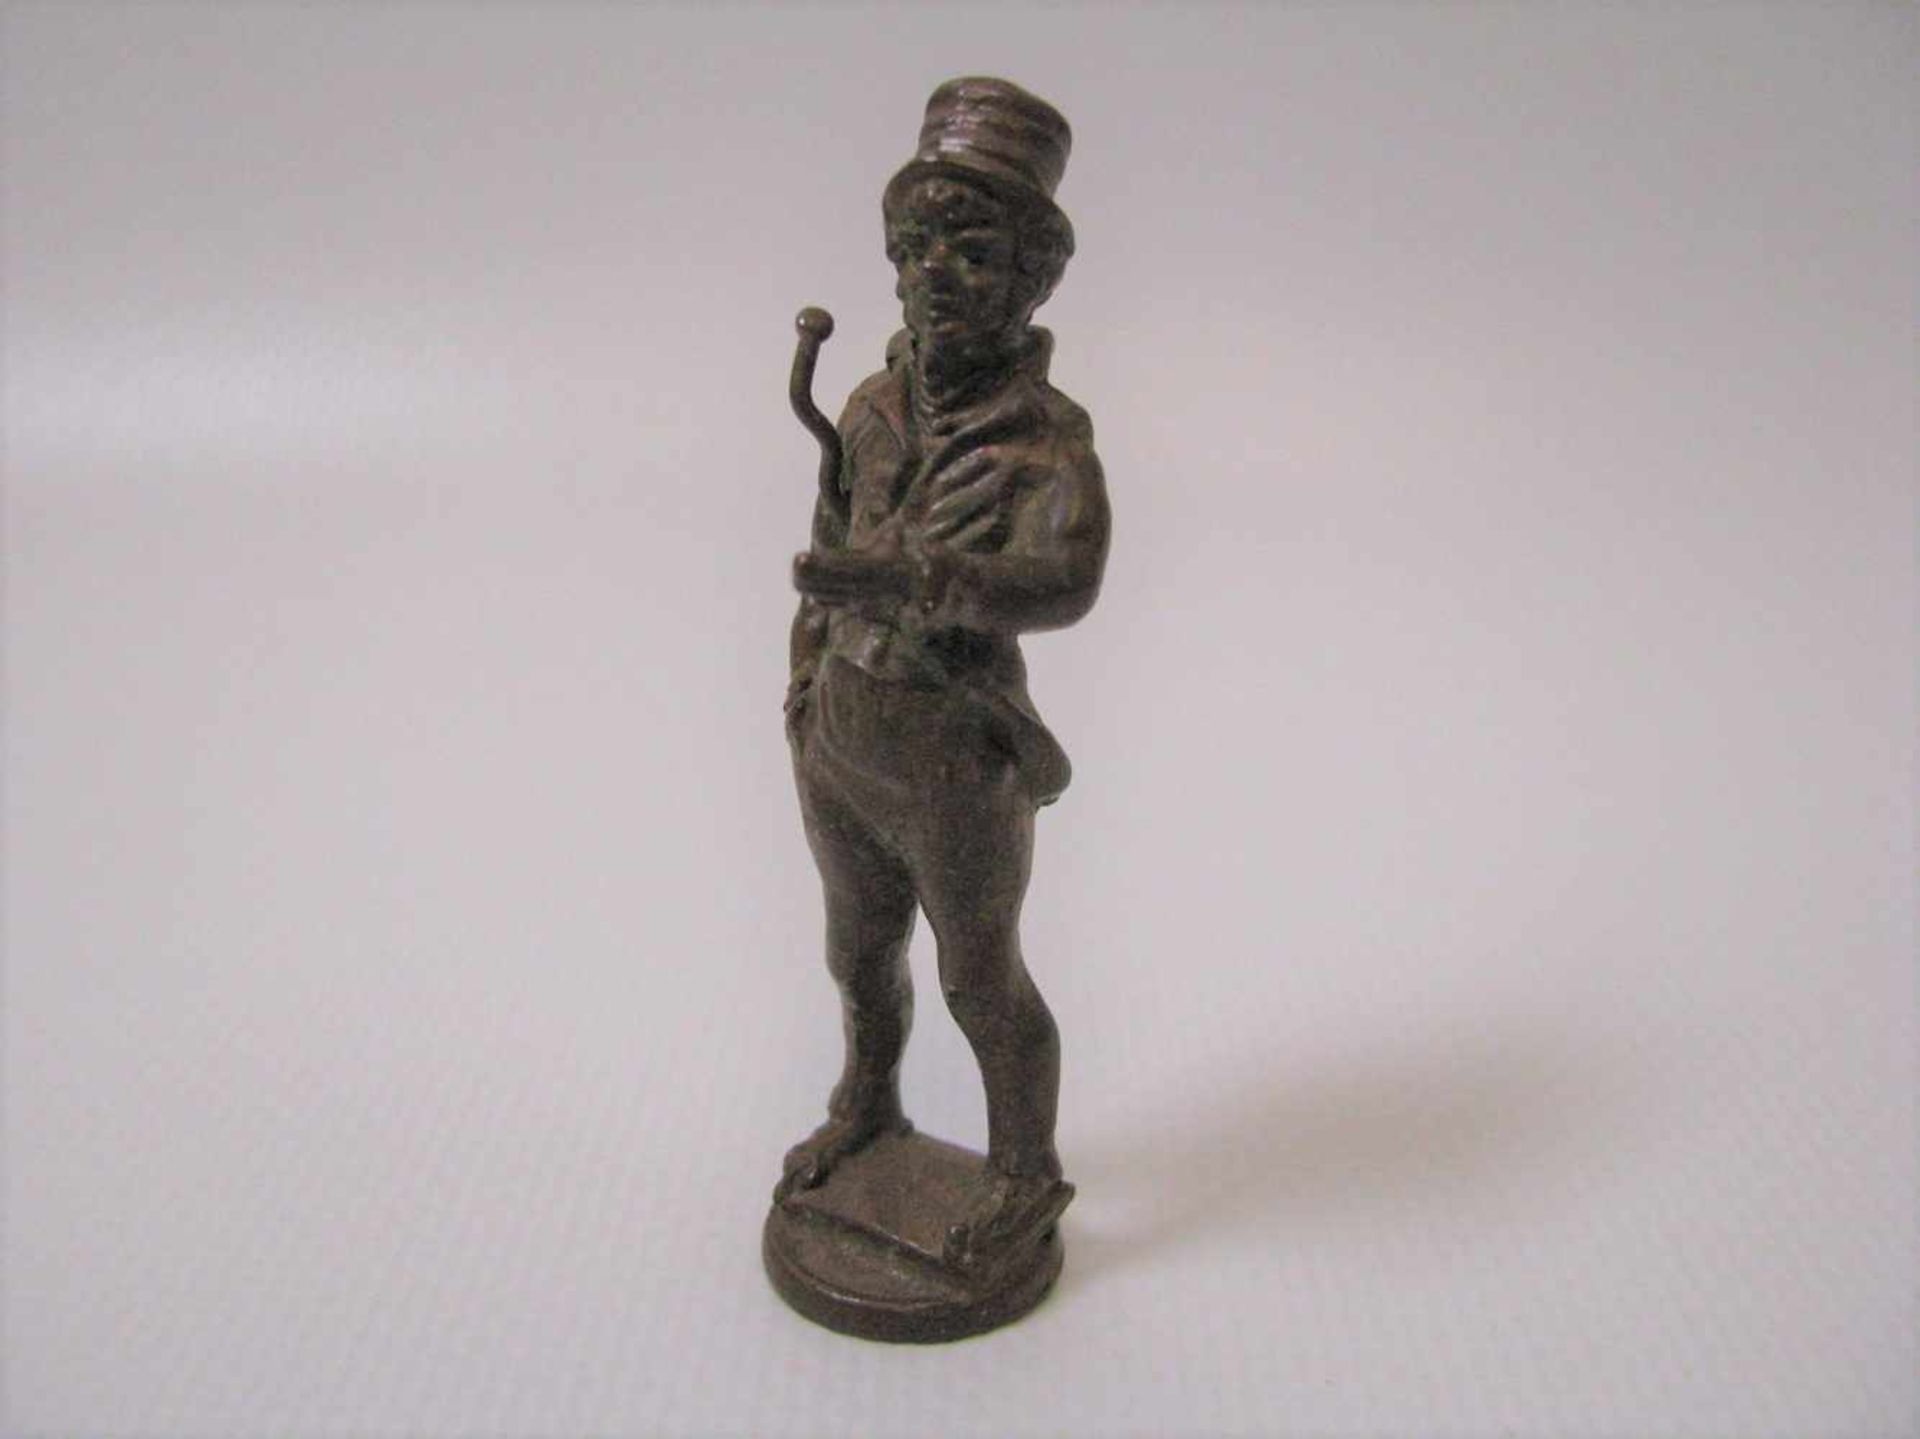 Kleinskulptur, um 1900, Bronze, h 6 cm, d 1,7 cm.- - -19.00 % buyer's premium on the hammer